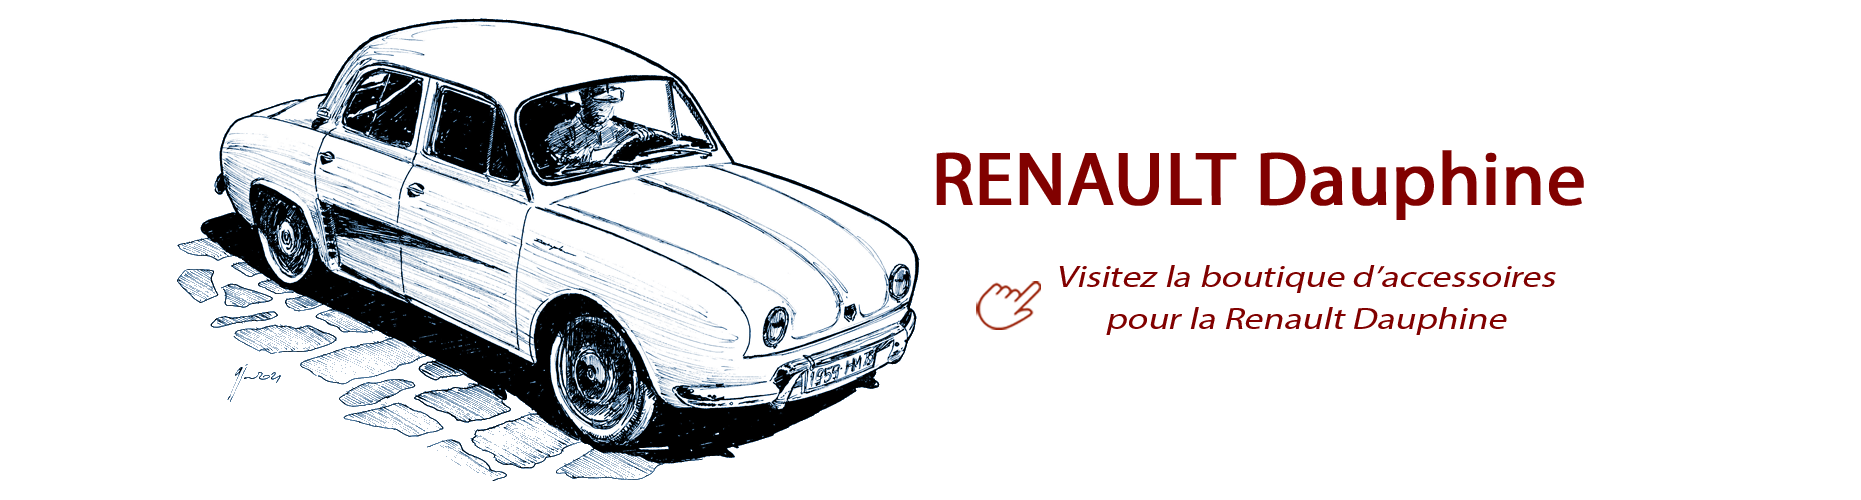 Catalogue Renault 4 CV | Depanoto